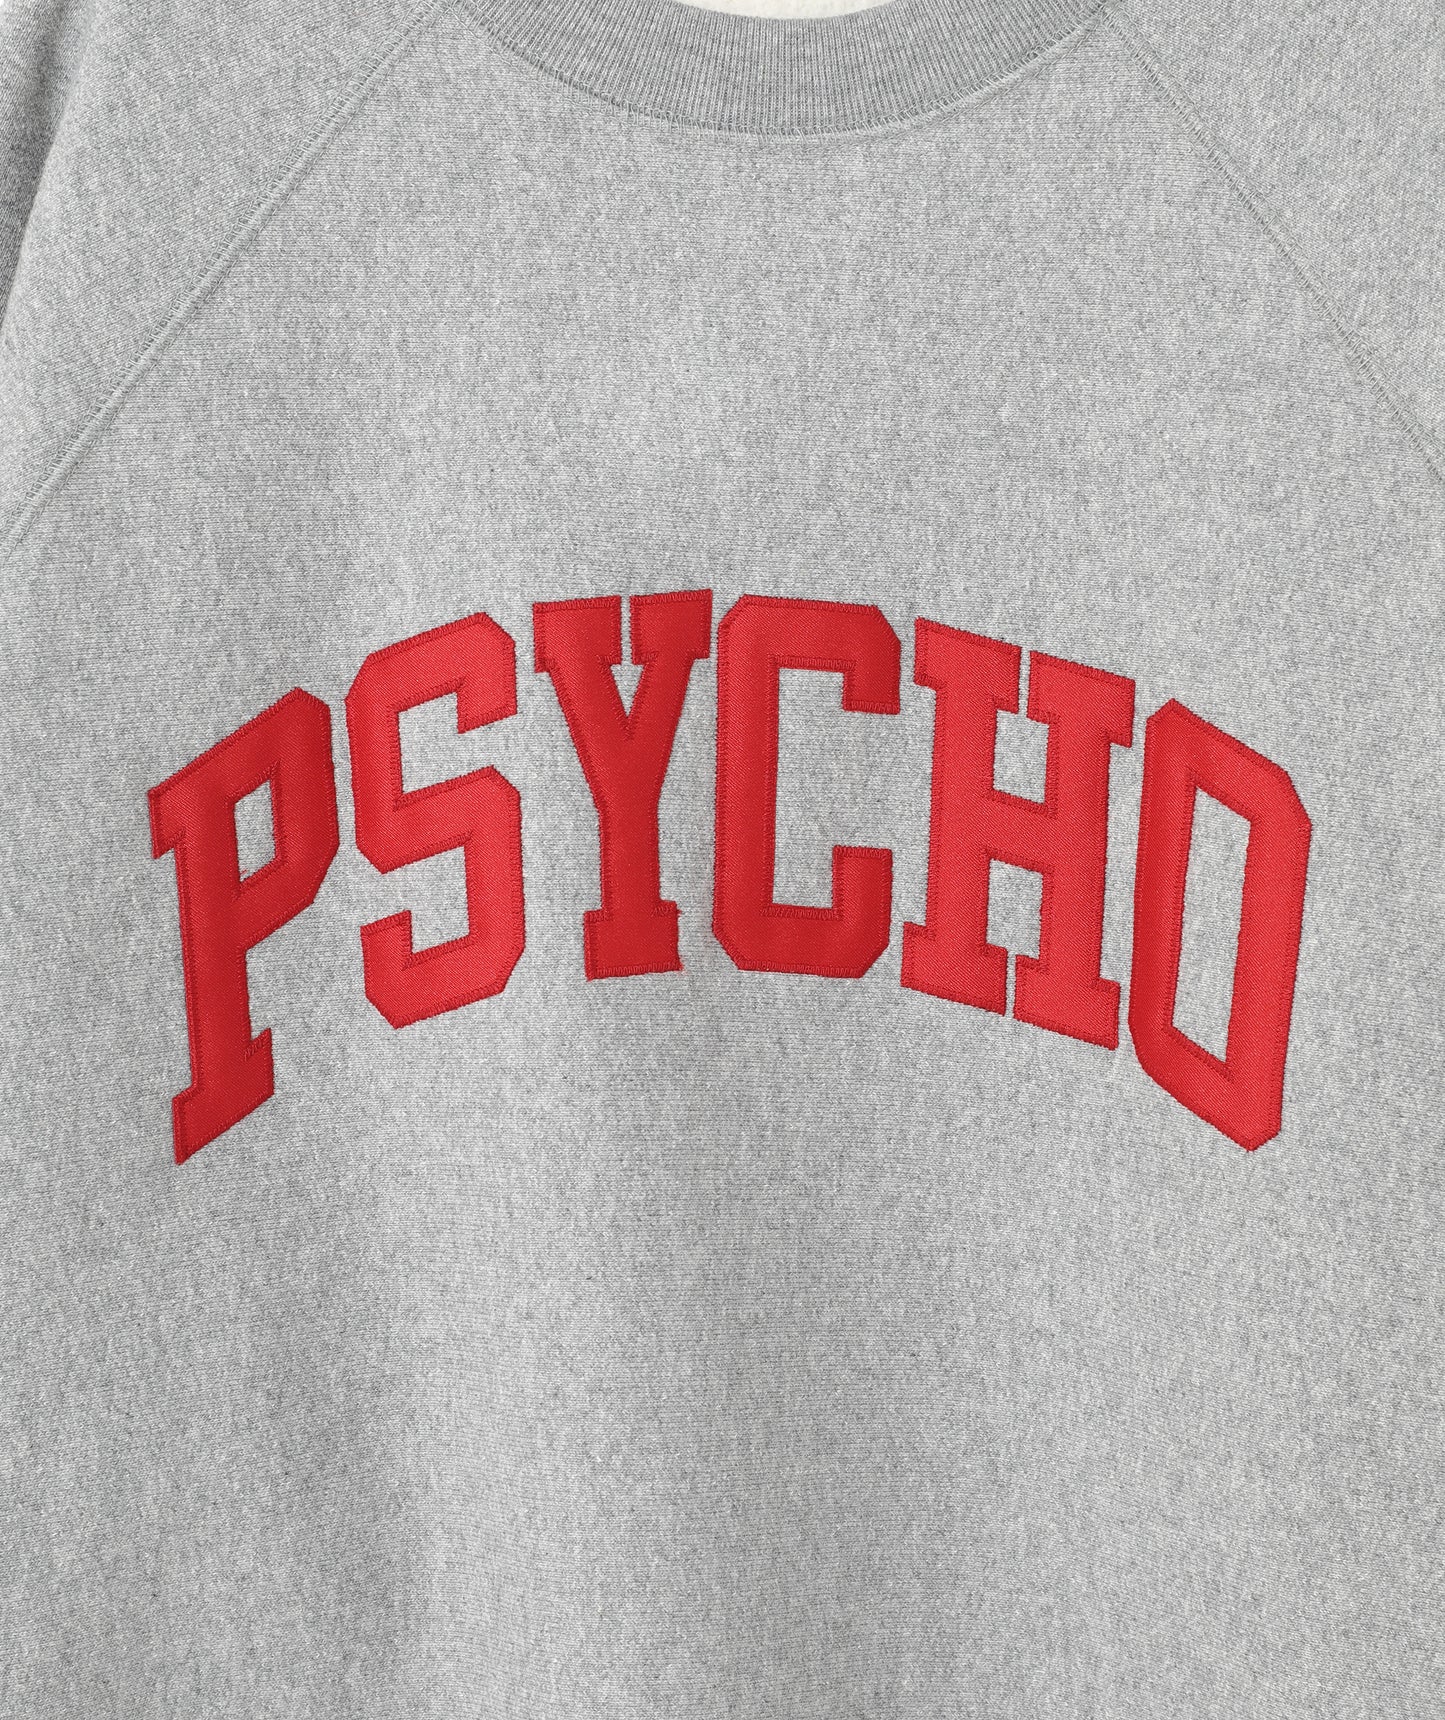 Psycho Sweatshirt